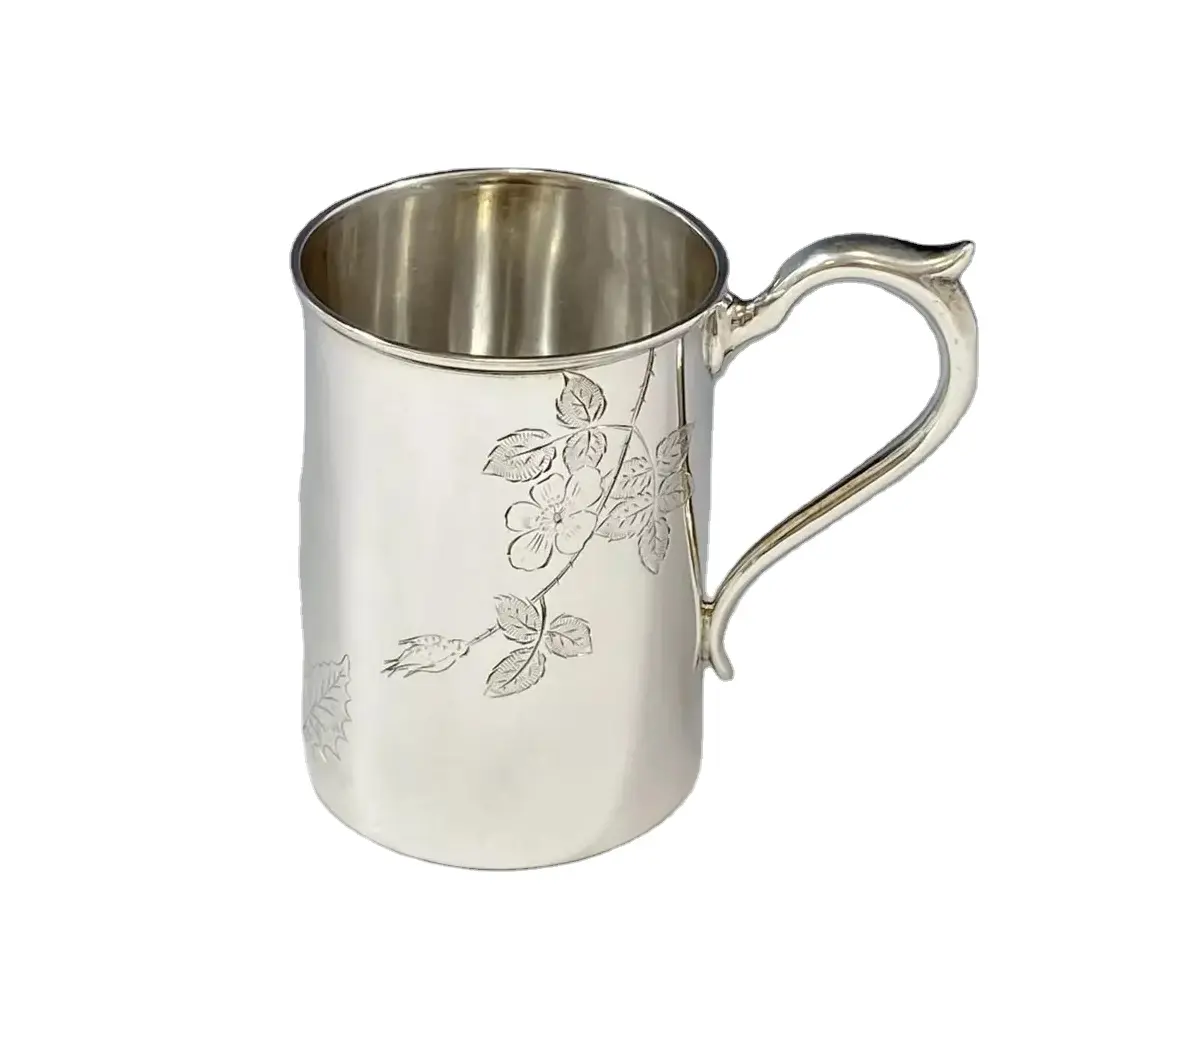 New silver brass pewter Medieval Mug For Drinking Ware New Brass Mug Latest Medieval Tankard Mug silver plated New Medieval